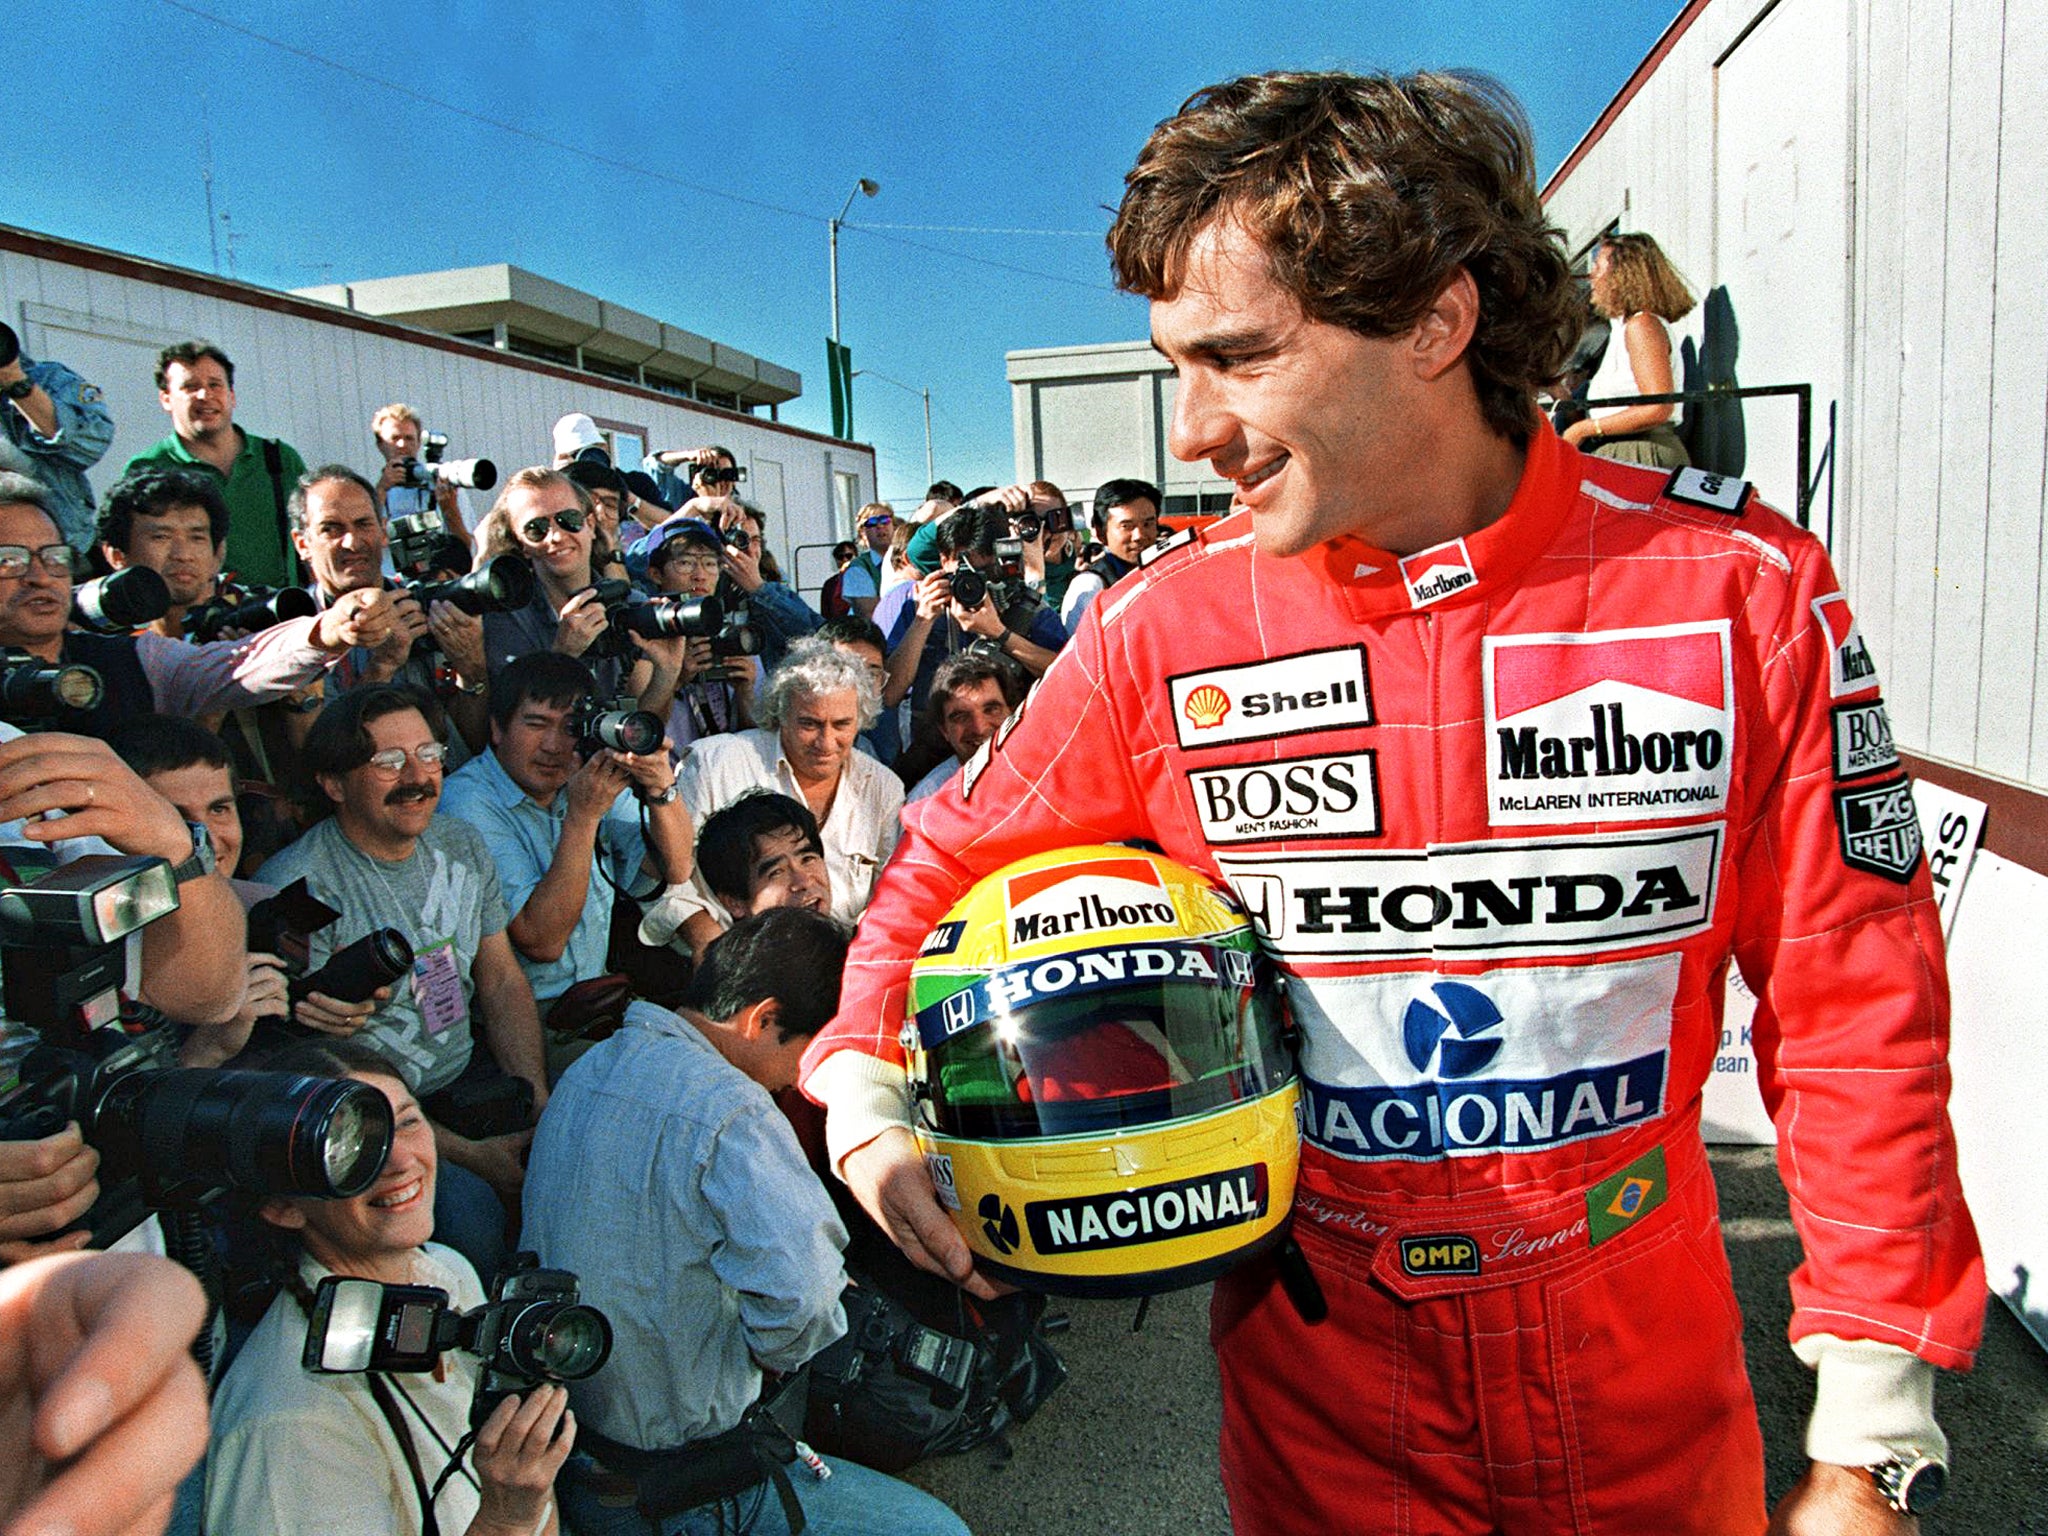 https://static.independent.co.uk/s3fs-public/thumbnails/image/2014/04/26/12/Ayrton-Senna.jpg